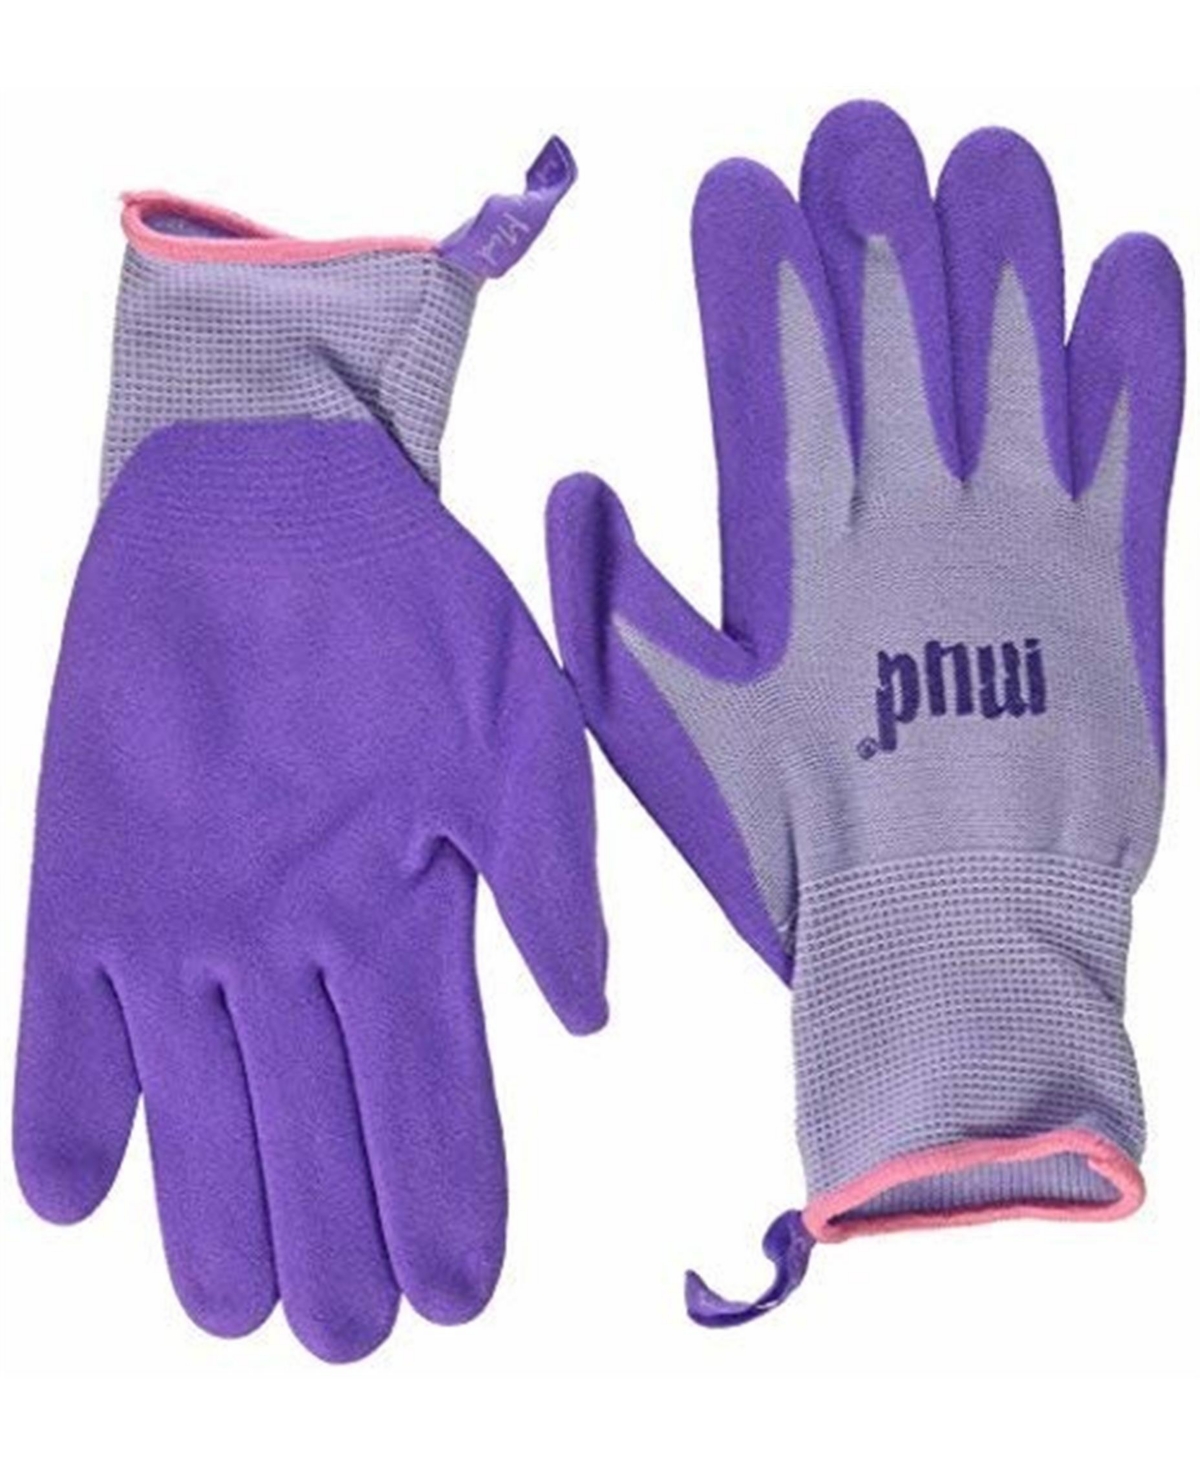 Mud Simply Mud Women's Nylon Garden Gloves, Passion Fruit, Size Small - Purple